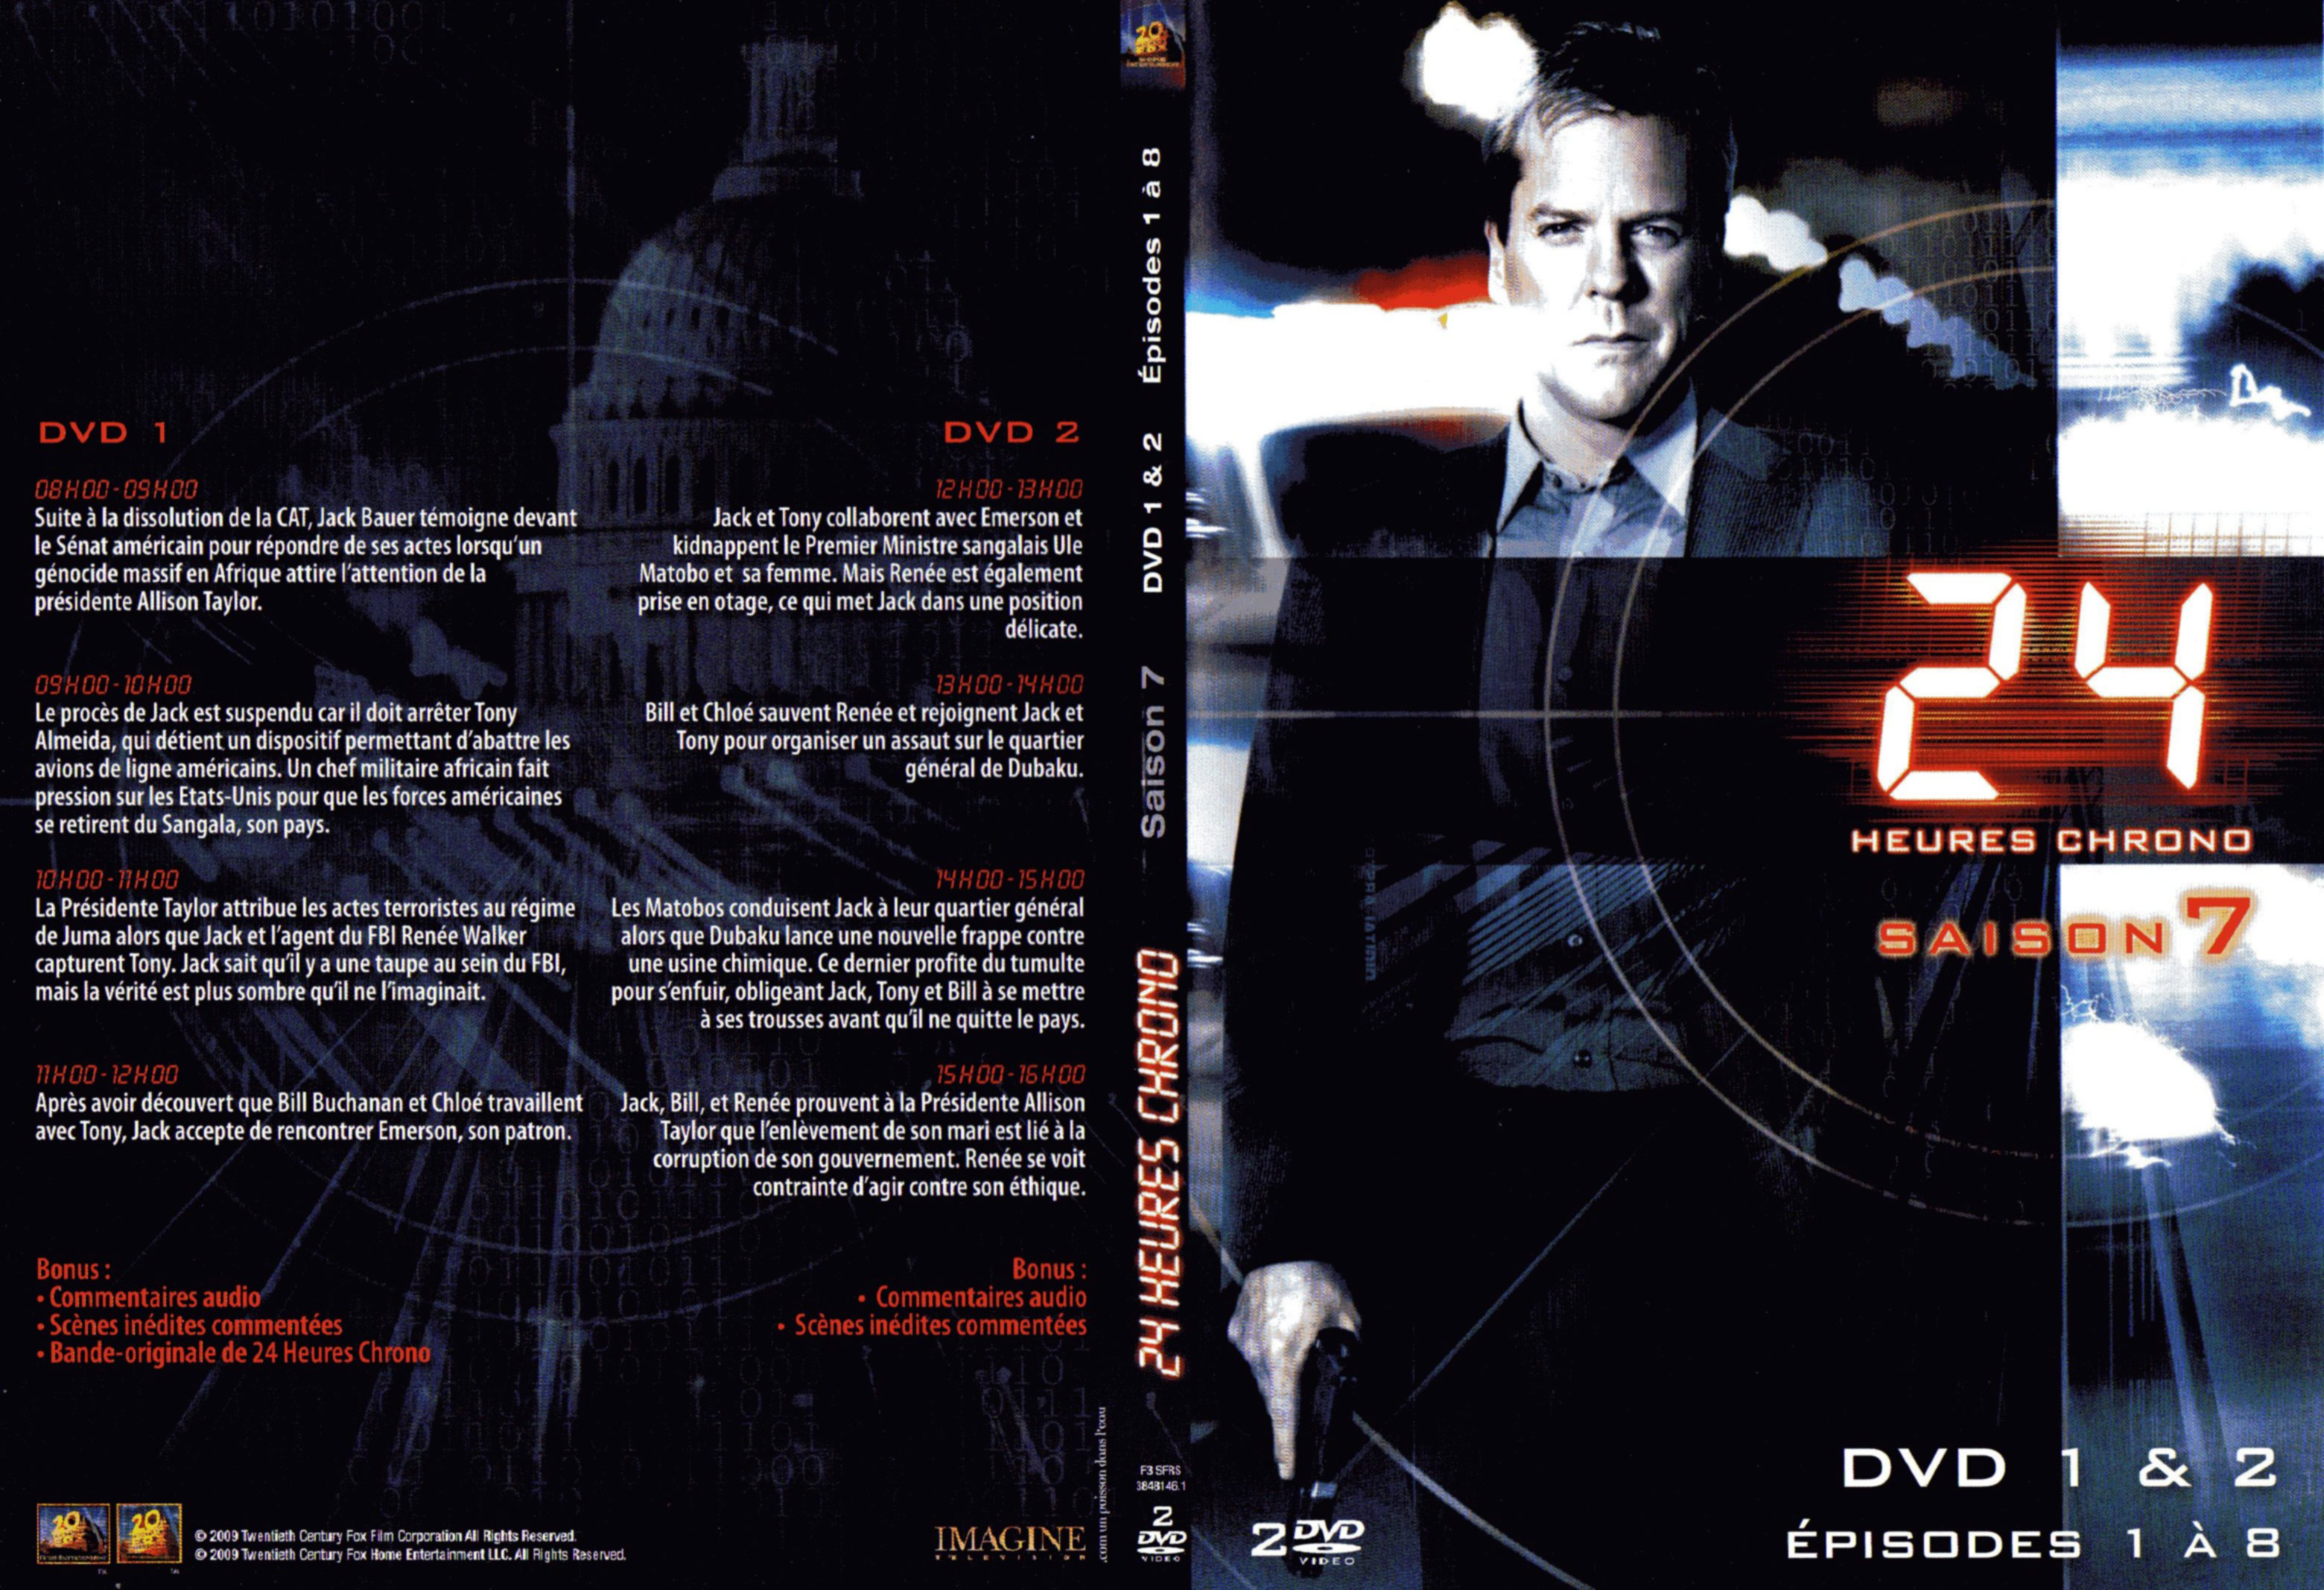 Jaquette DVD 24 heures chrono Saison 7 DVD 1